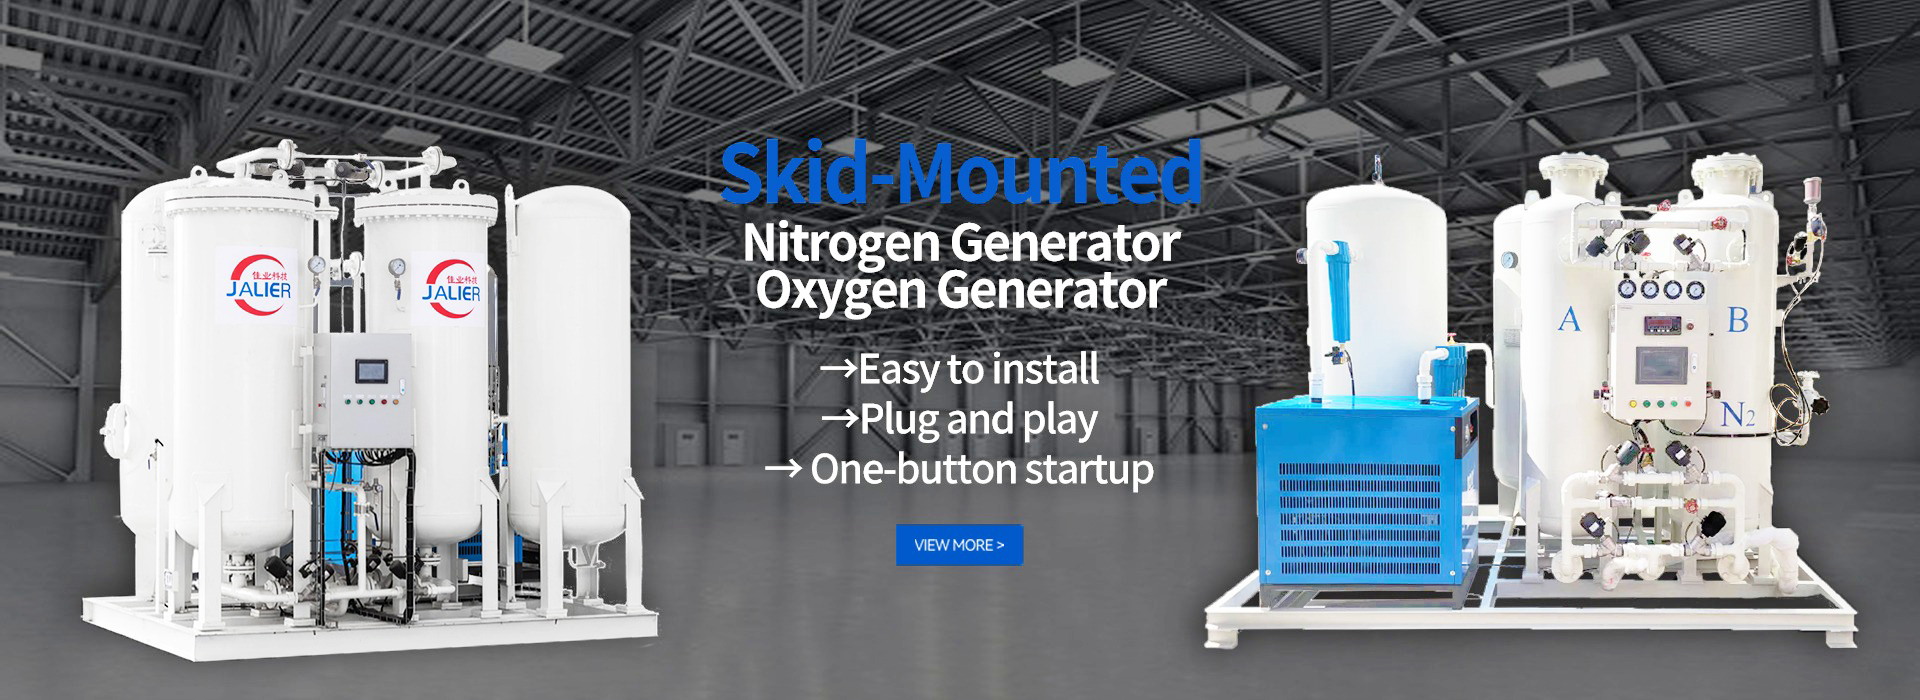 skid-mounted oxygen generator